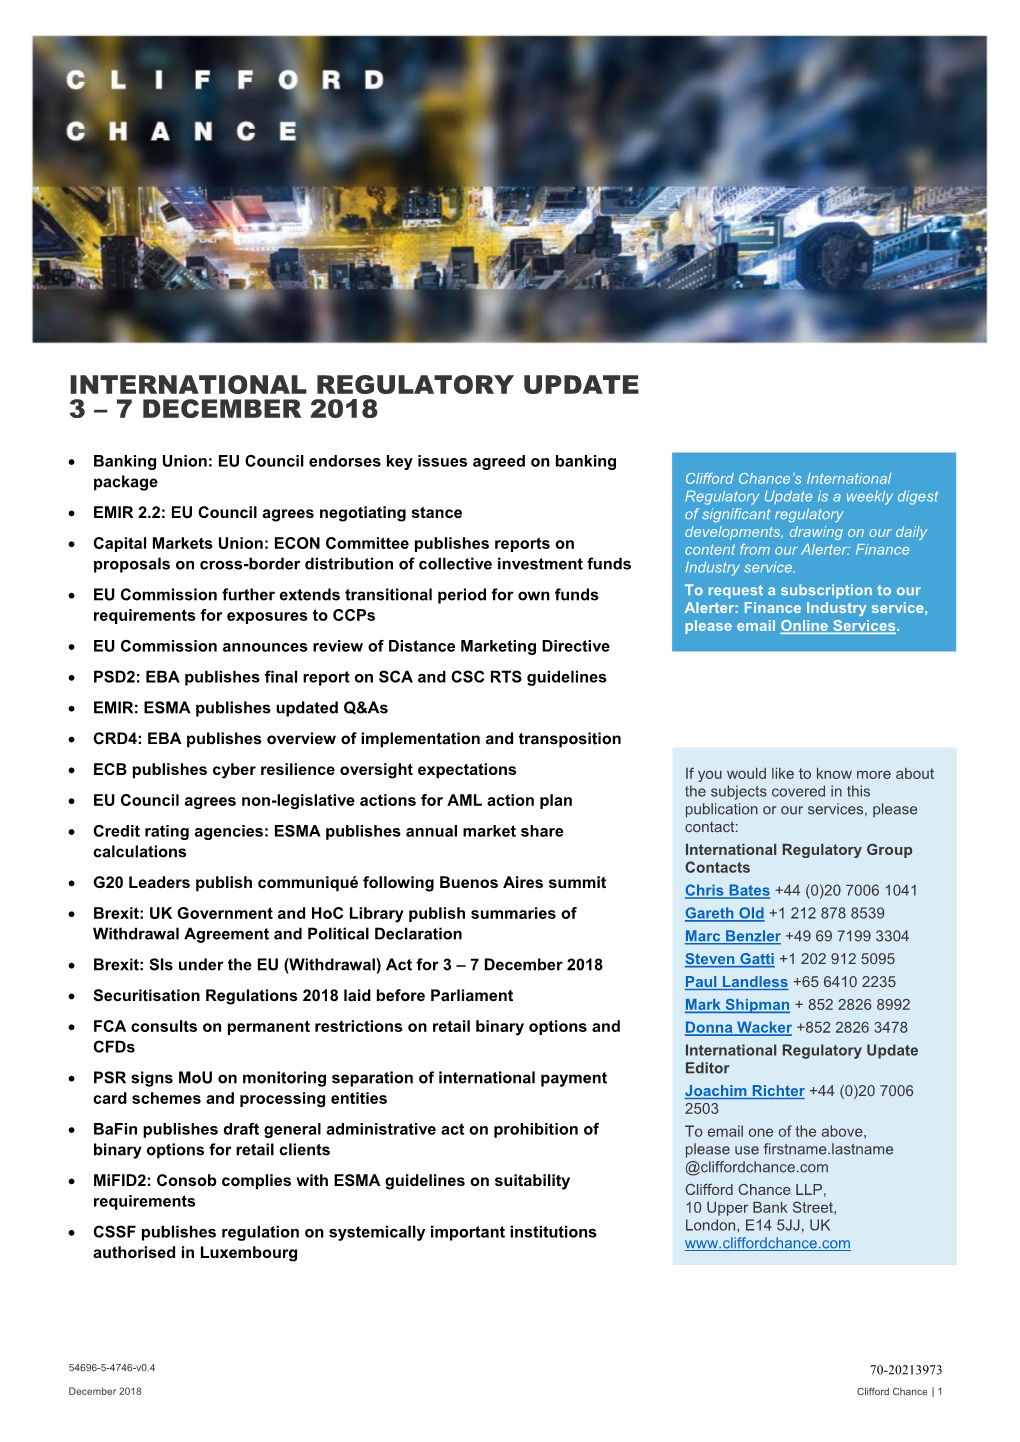 International Regulatory Update 3 – 7 December 2018